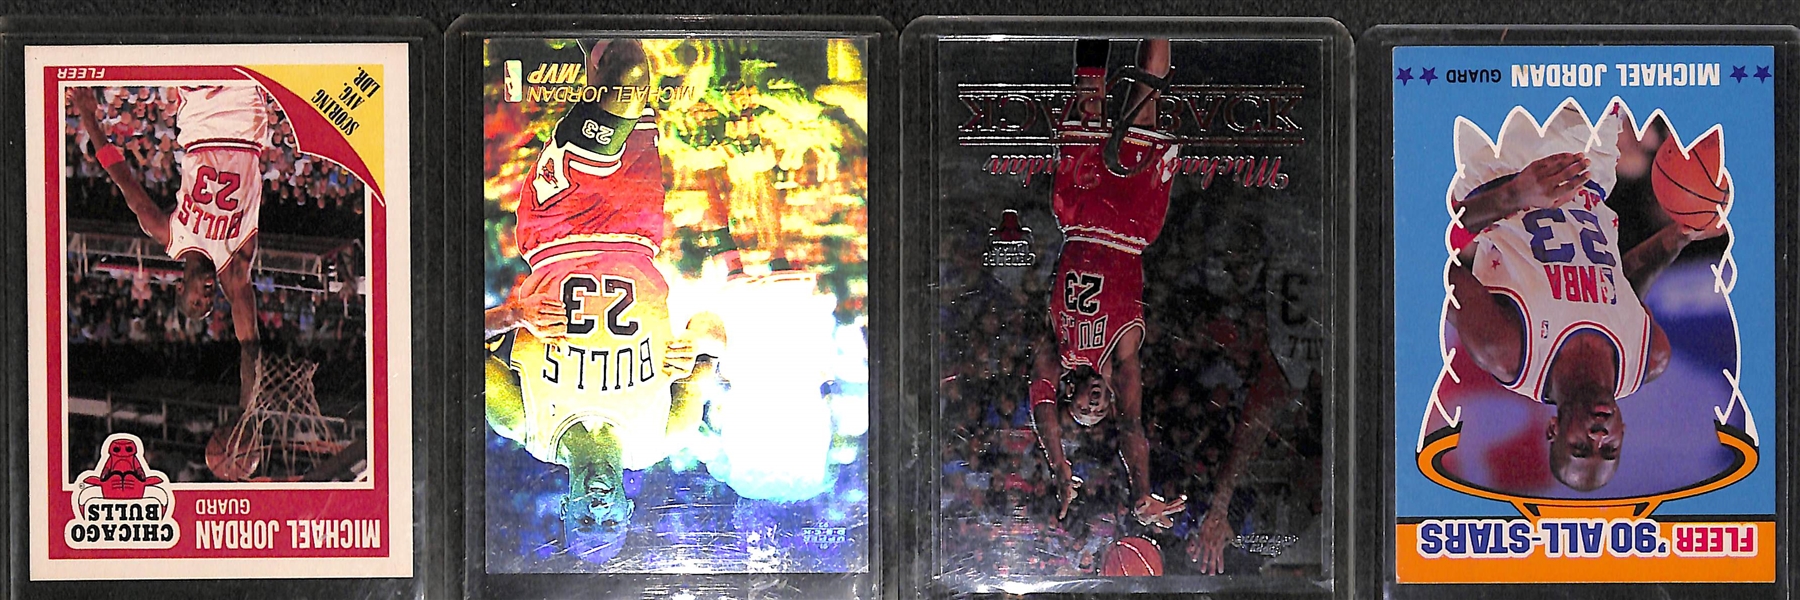 Lot of 80 Michael Jordan Insert Cards